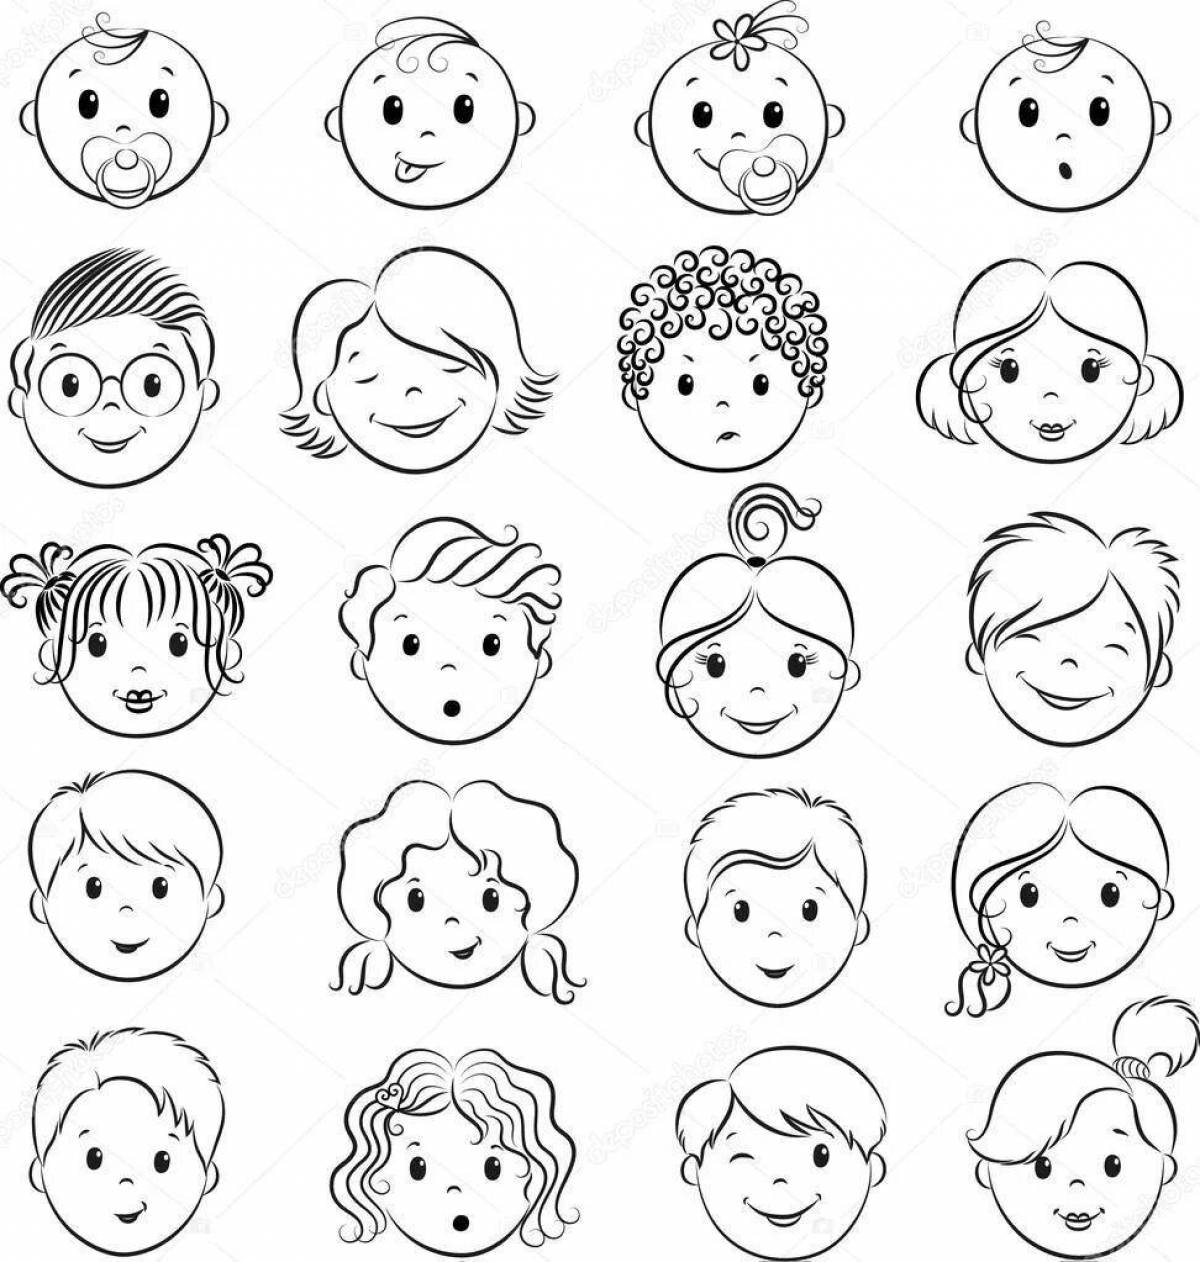 Joyful emotion coloring pages for kids